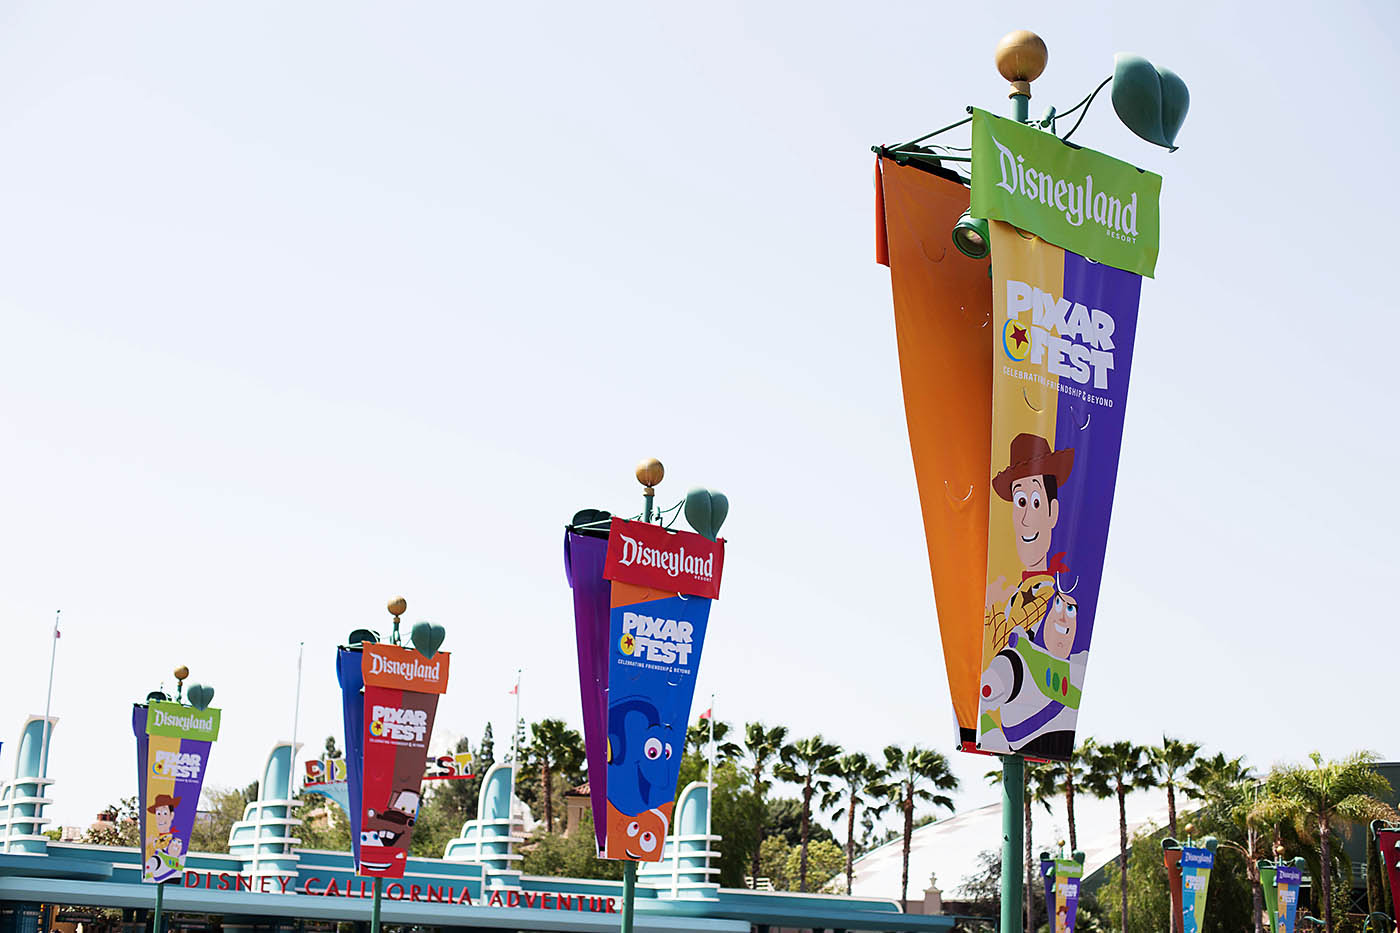 The Ultimate Guide to Pixar Fest at Disneyland and Disney California Adventure